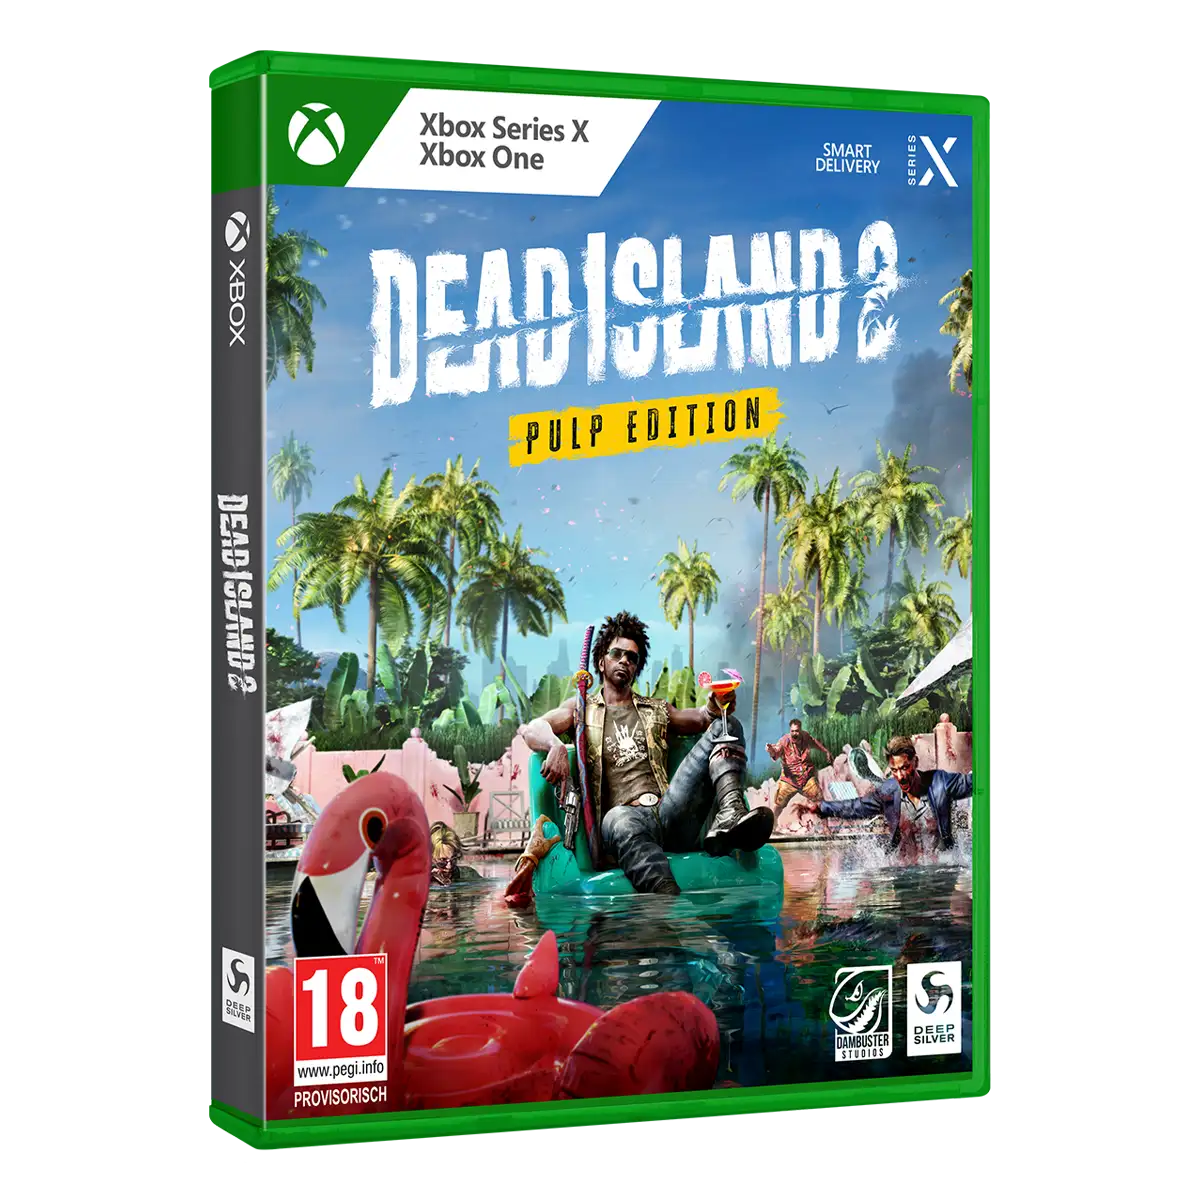 Dead Island 2 PULP Edition (XONE/XSRX) (PEGI) Image 2